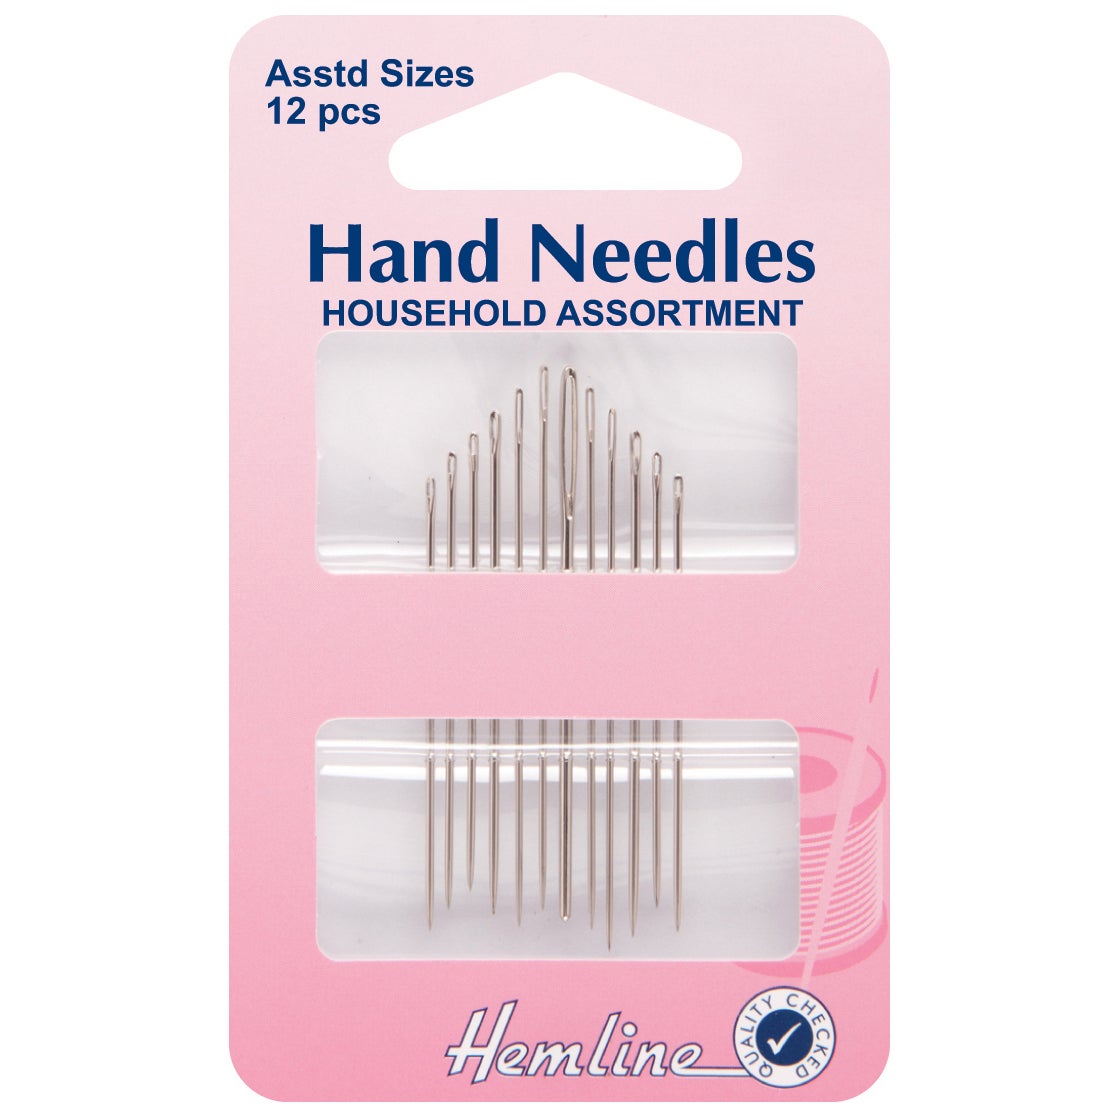 Hemline Household Assortment Hand Needles | Dunelm